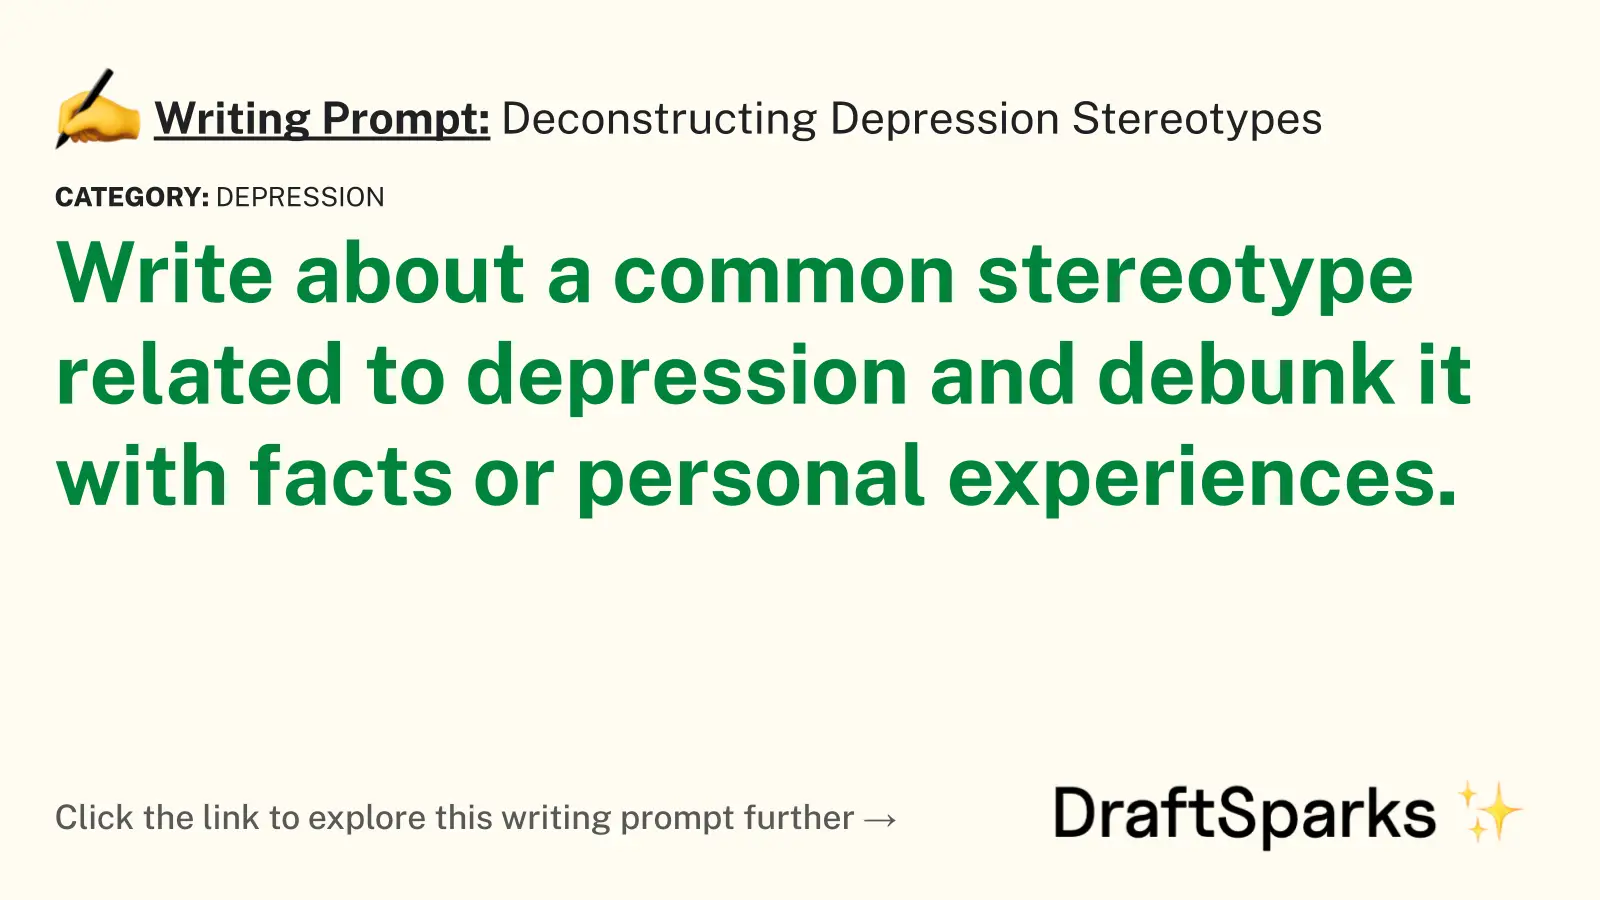 Deconstructing Depression Stereotypes